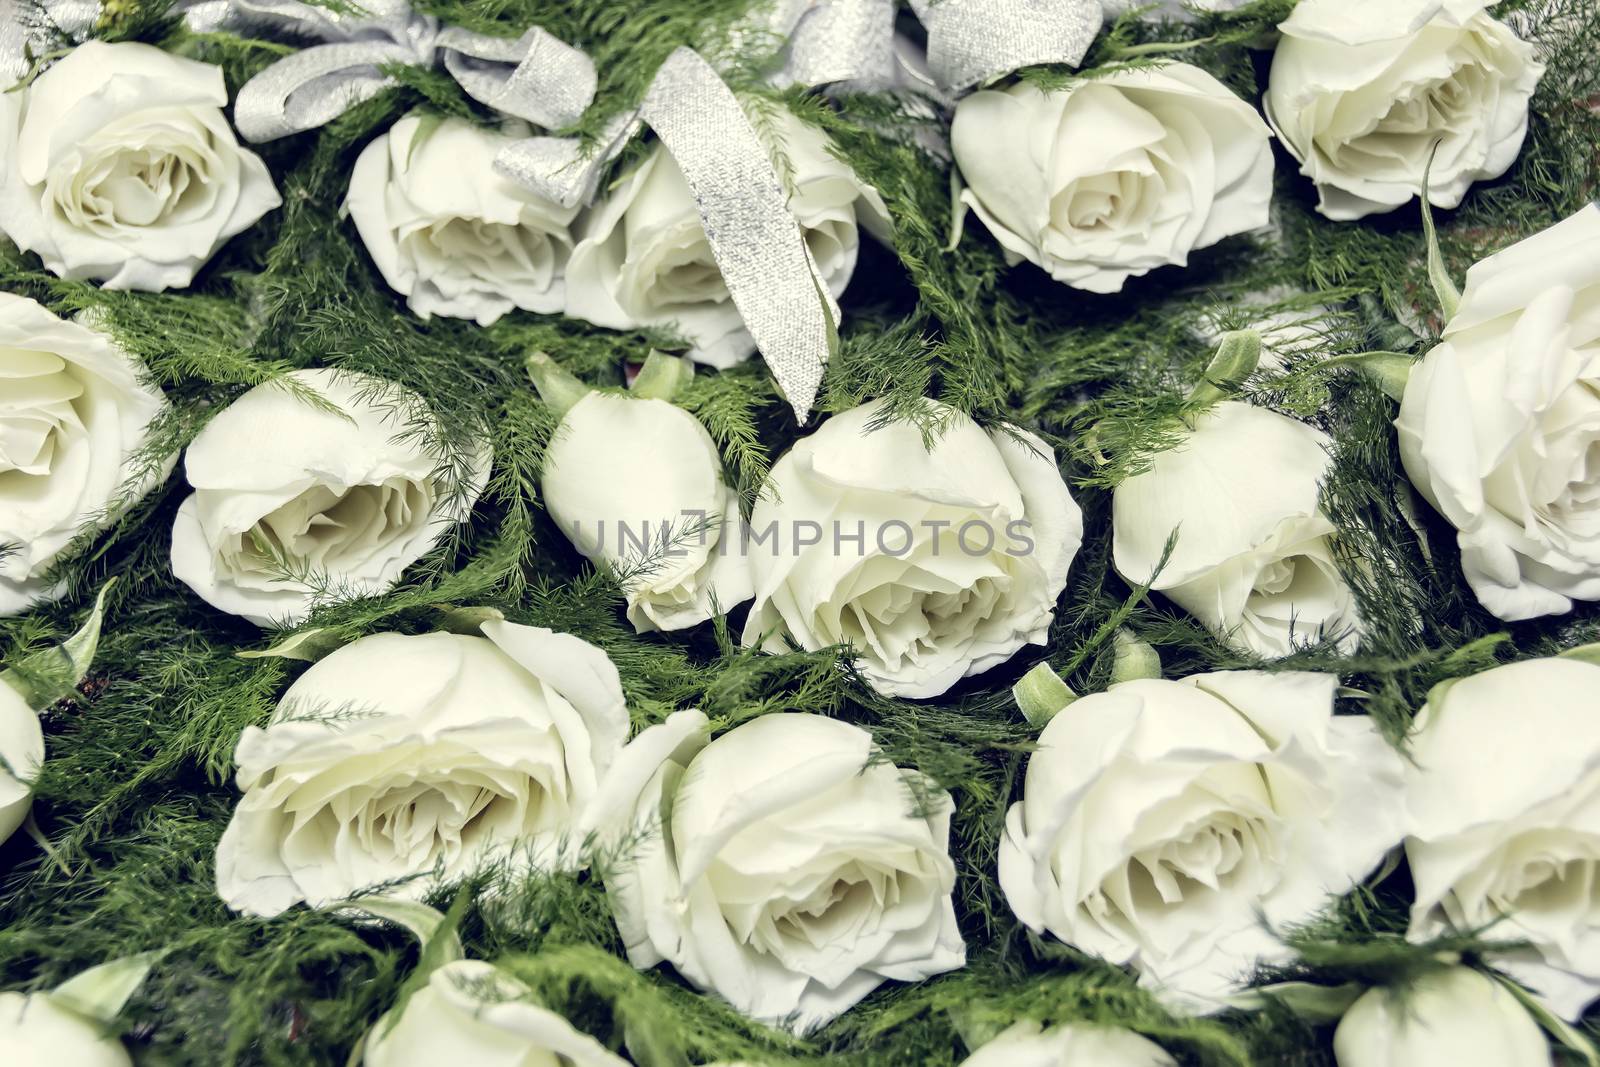 Rows of white rose boutonniere for wedding entourage